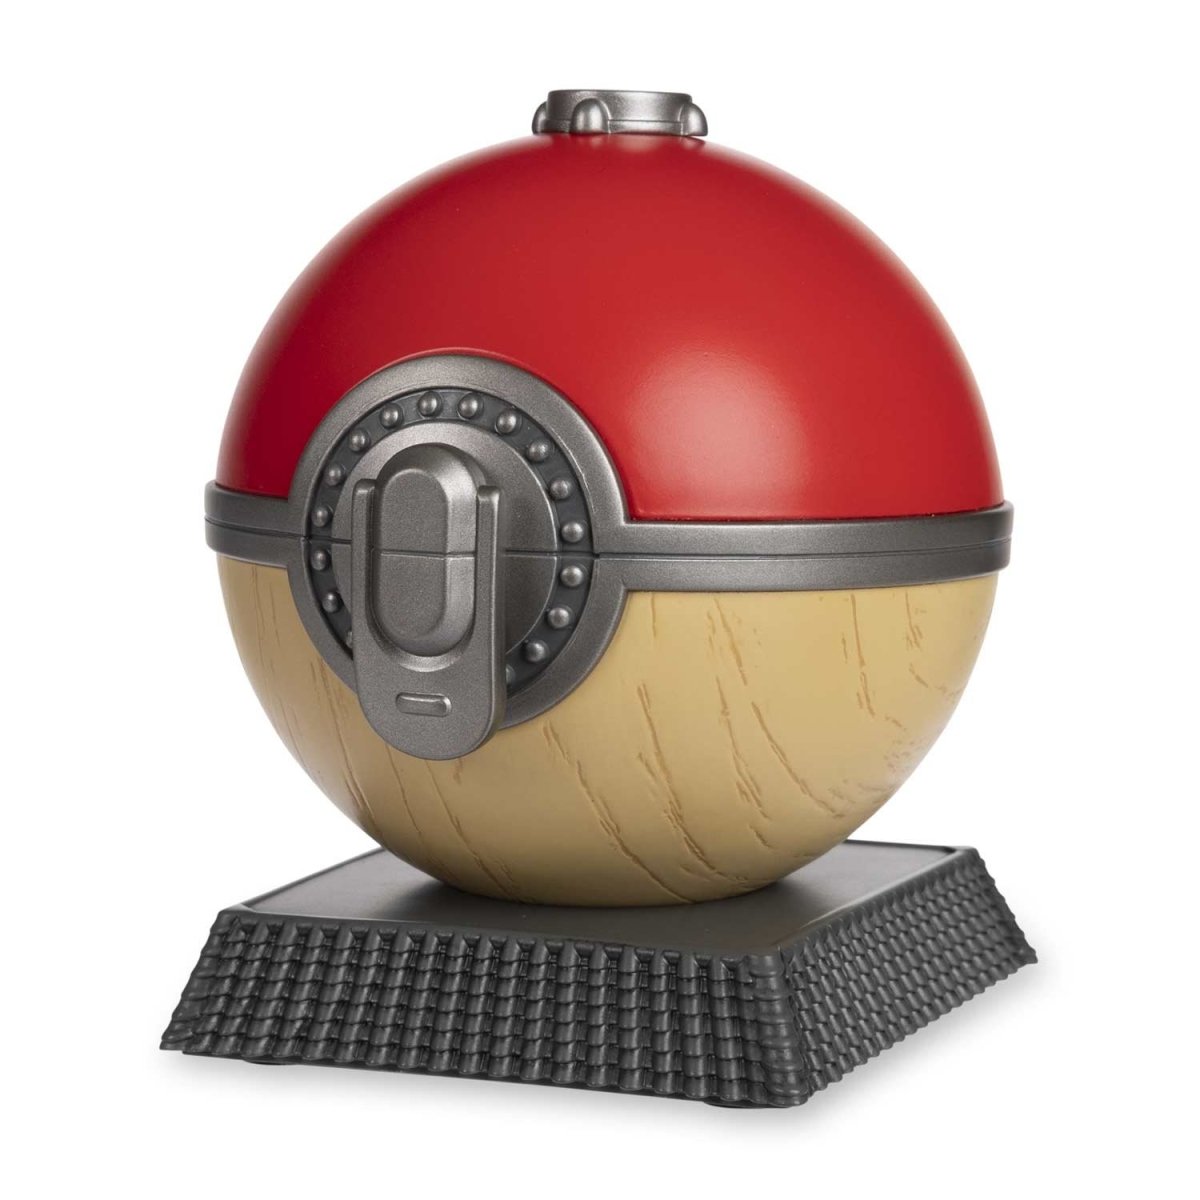 Pokémon - Pokéball et Figurine 5 cm